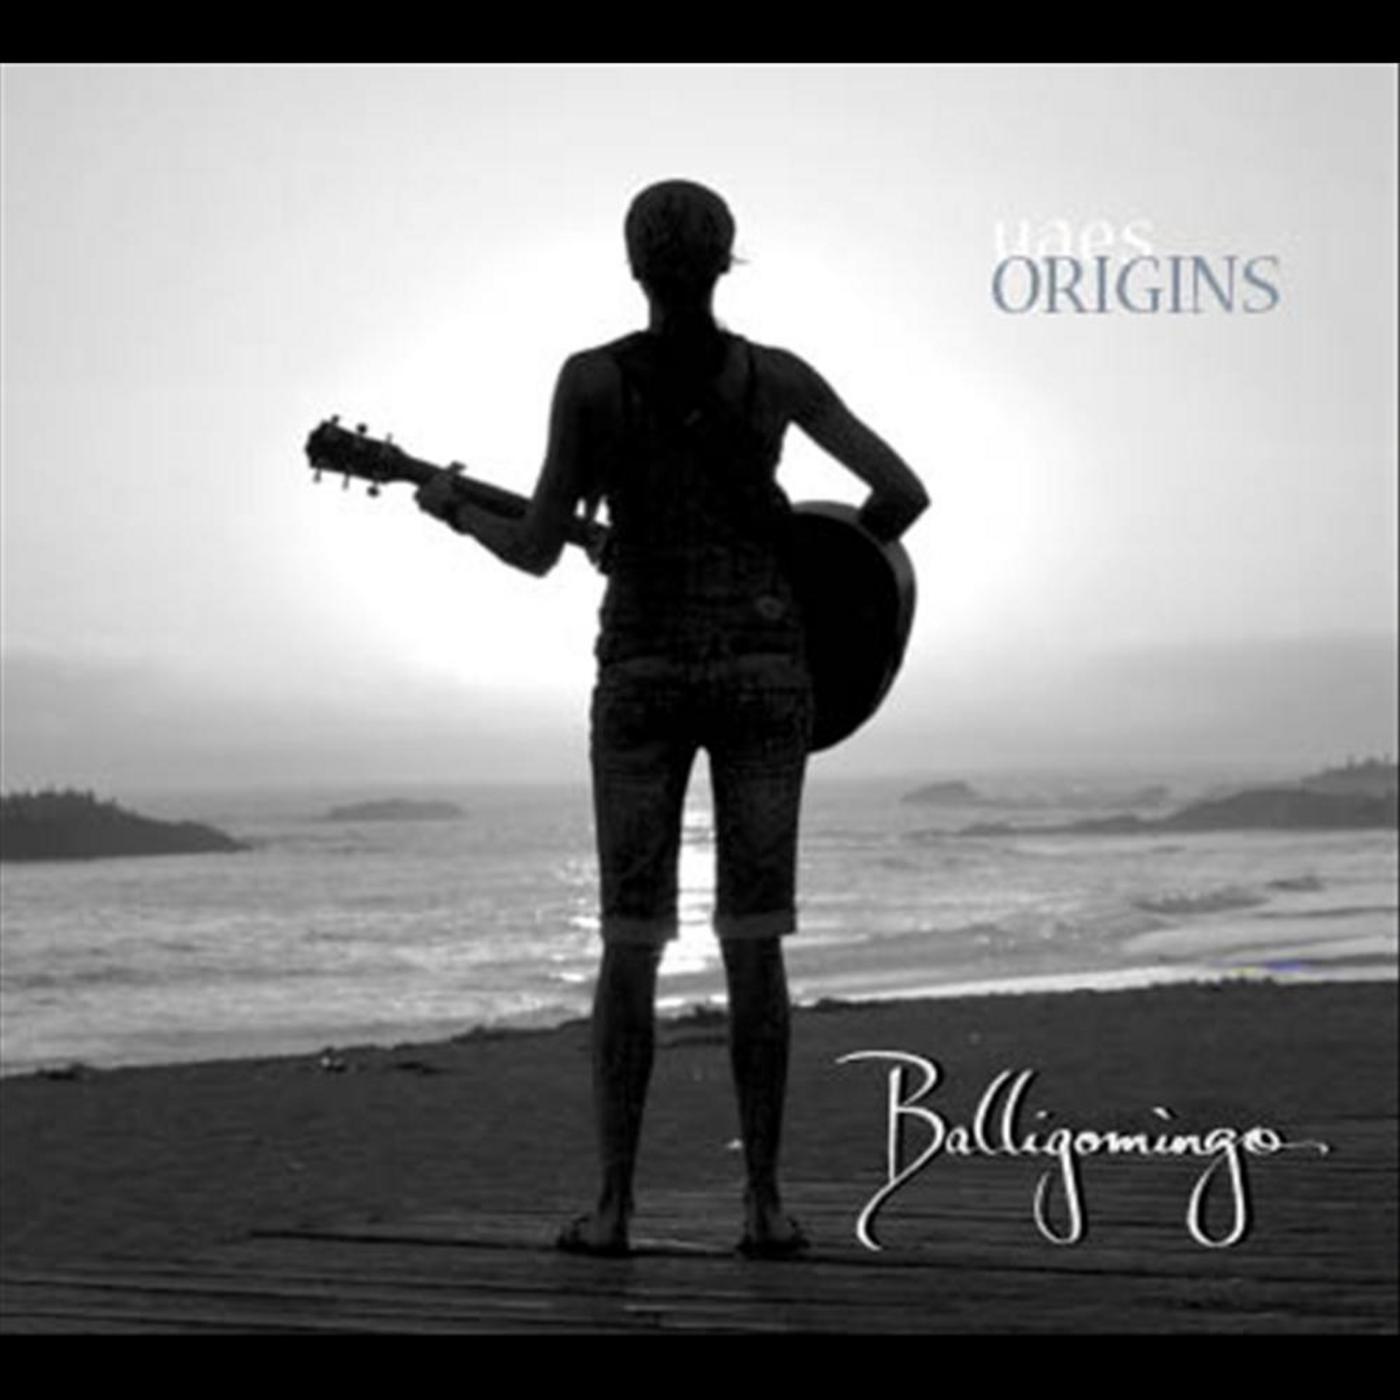 Balligomingo - I Just Tell Myself (Acoustic Mix)